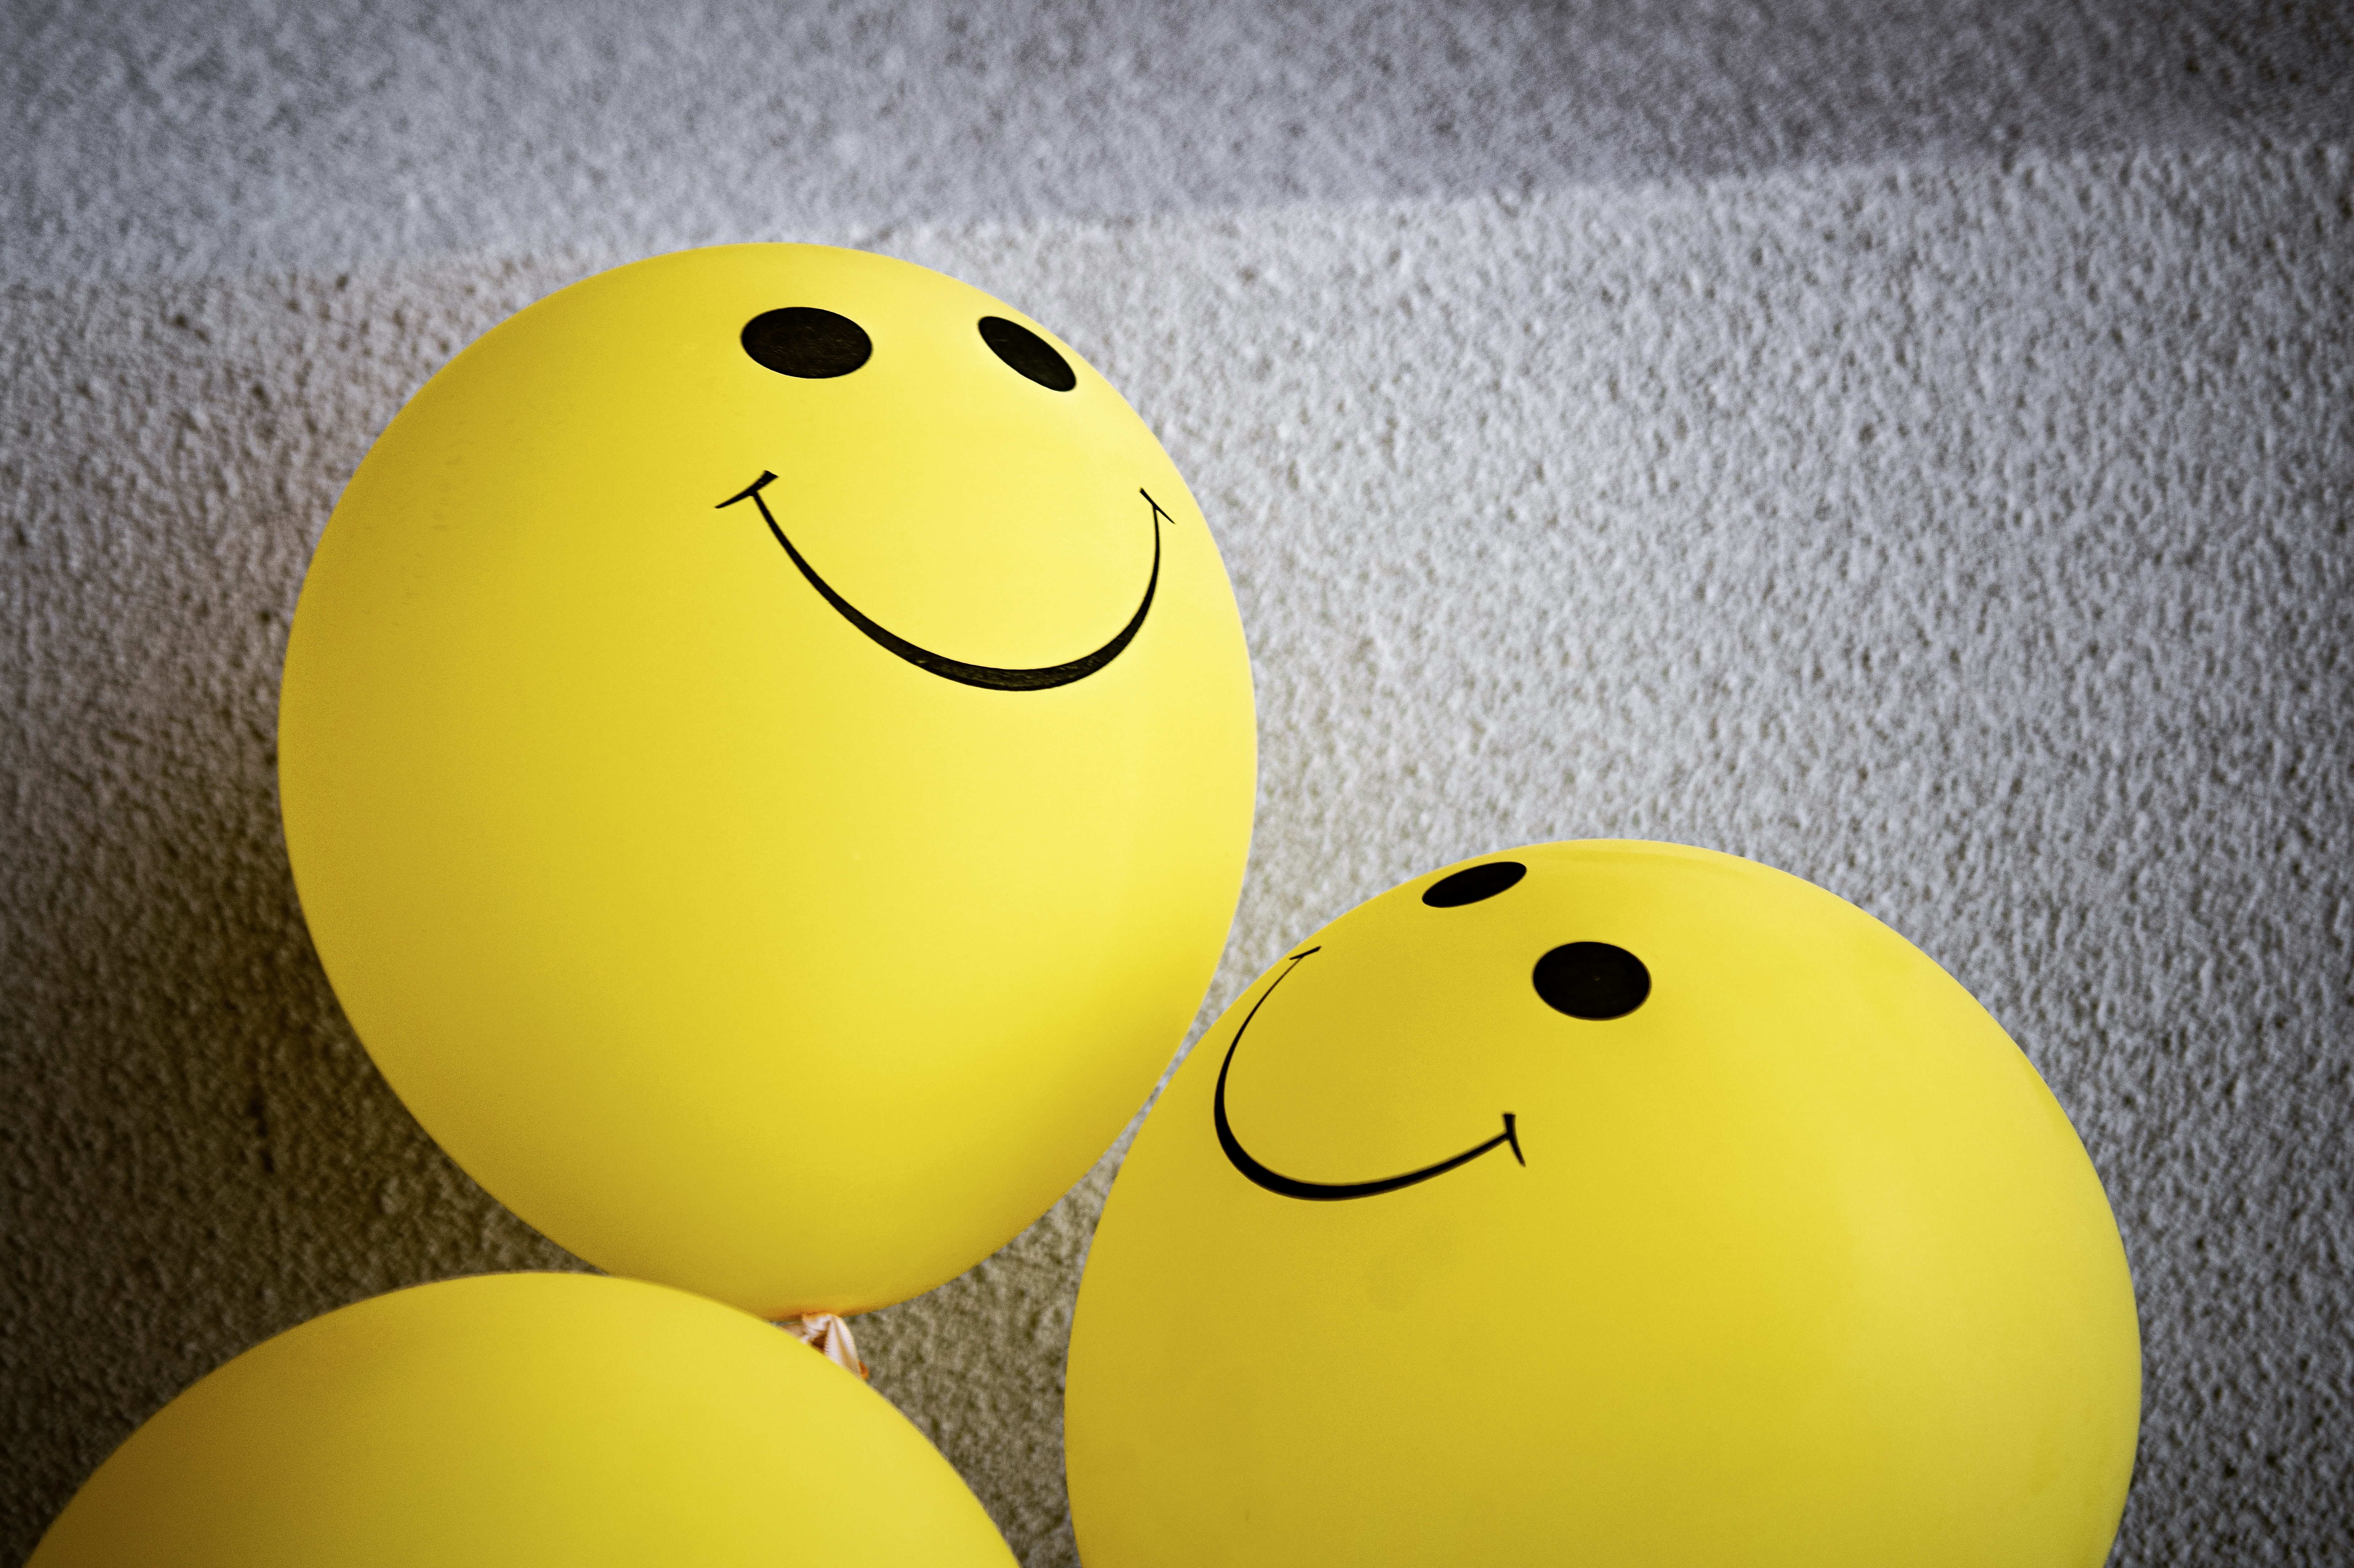 Free HD emoticons, balloons, smileys, yellow, miscellanea, miscellaneous, air balloons